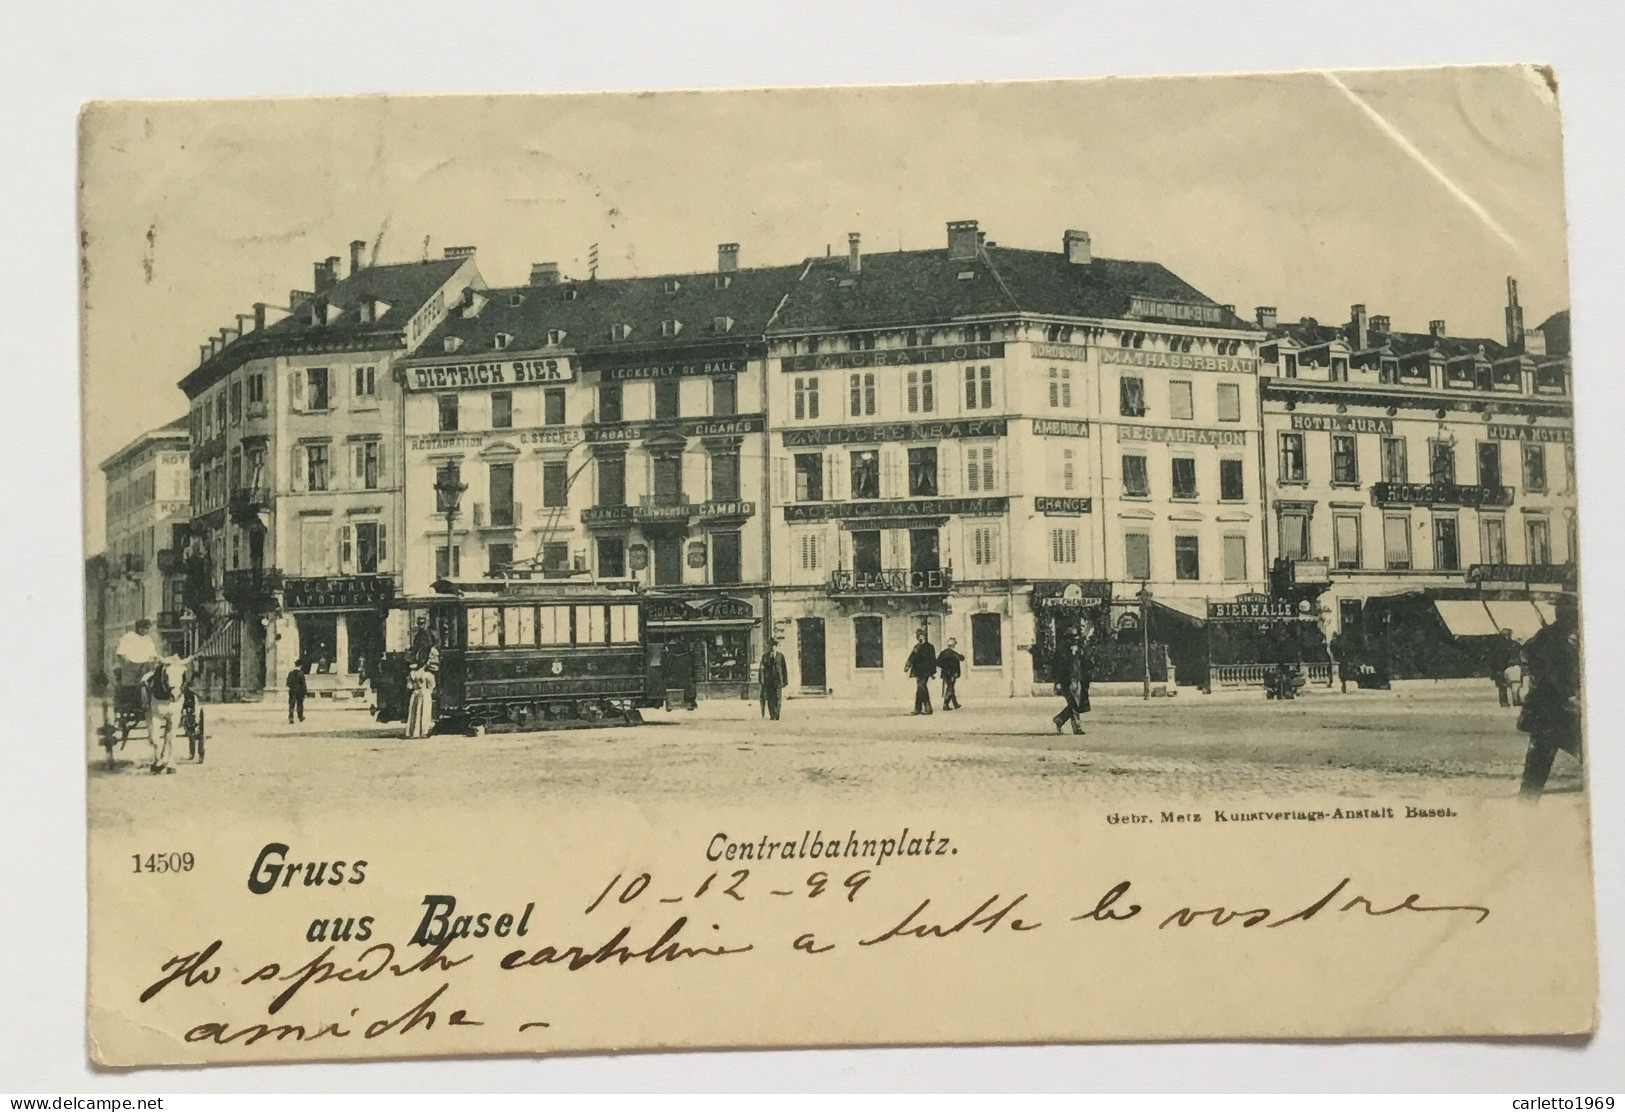 GRUSS AUS BASEL - CENTRALBAHNPLATZ 1899 TRAM + INSEGNE - VIAGGIATA FP - Basel